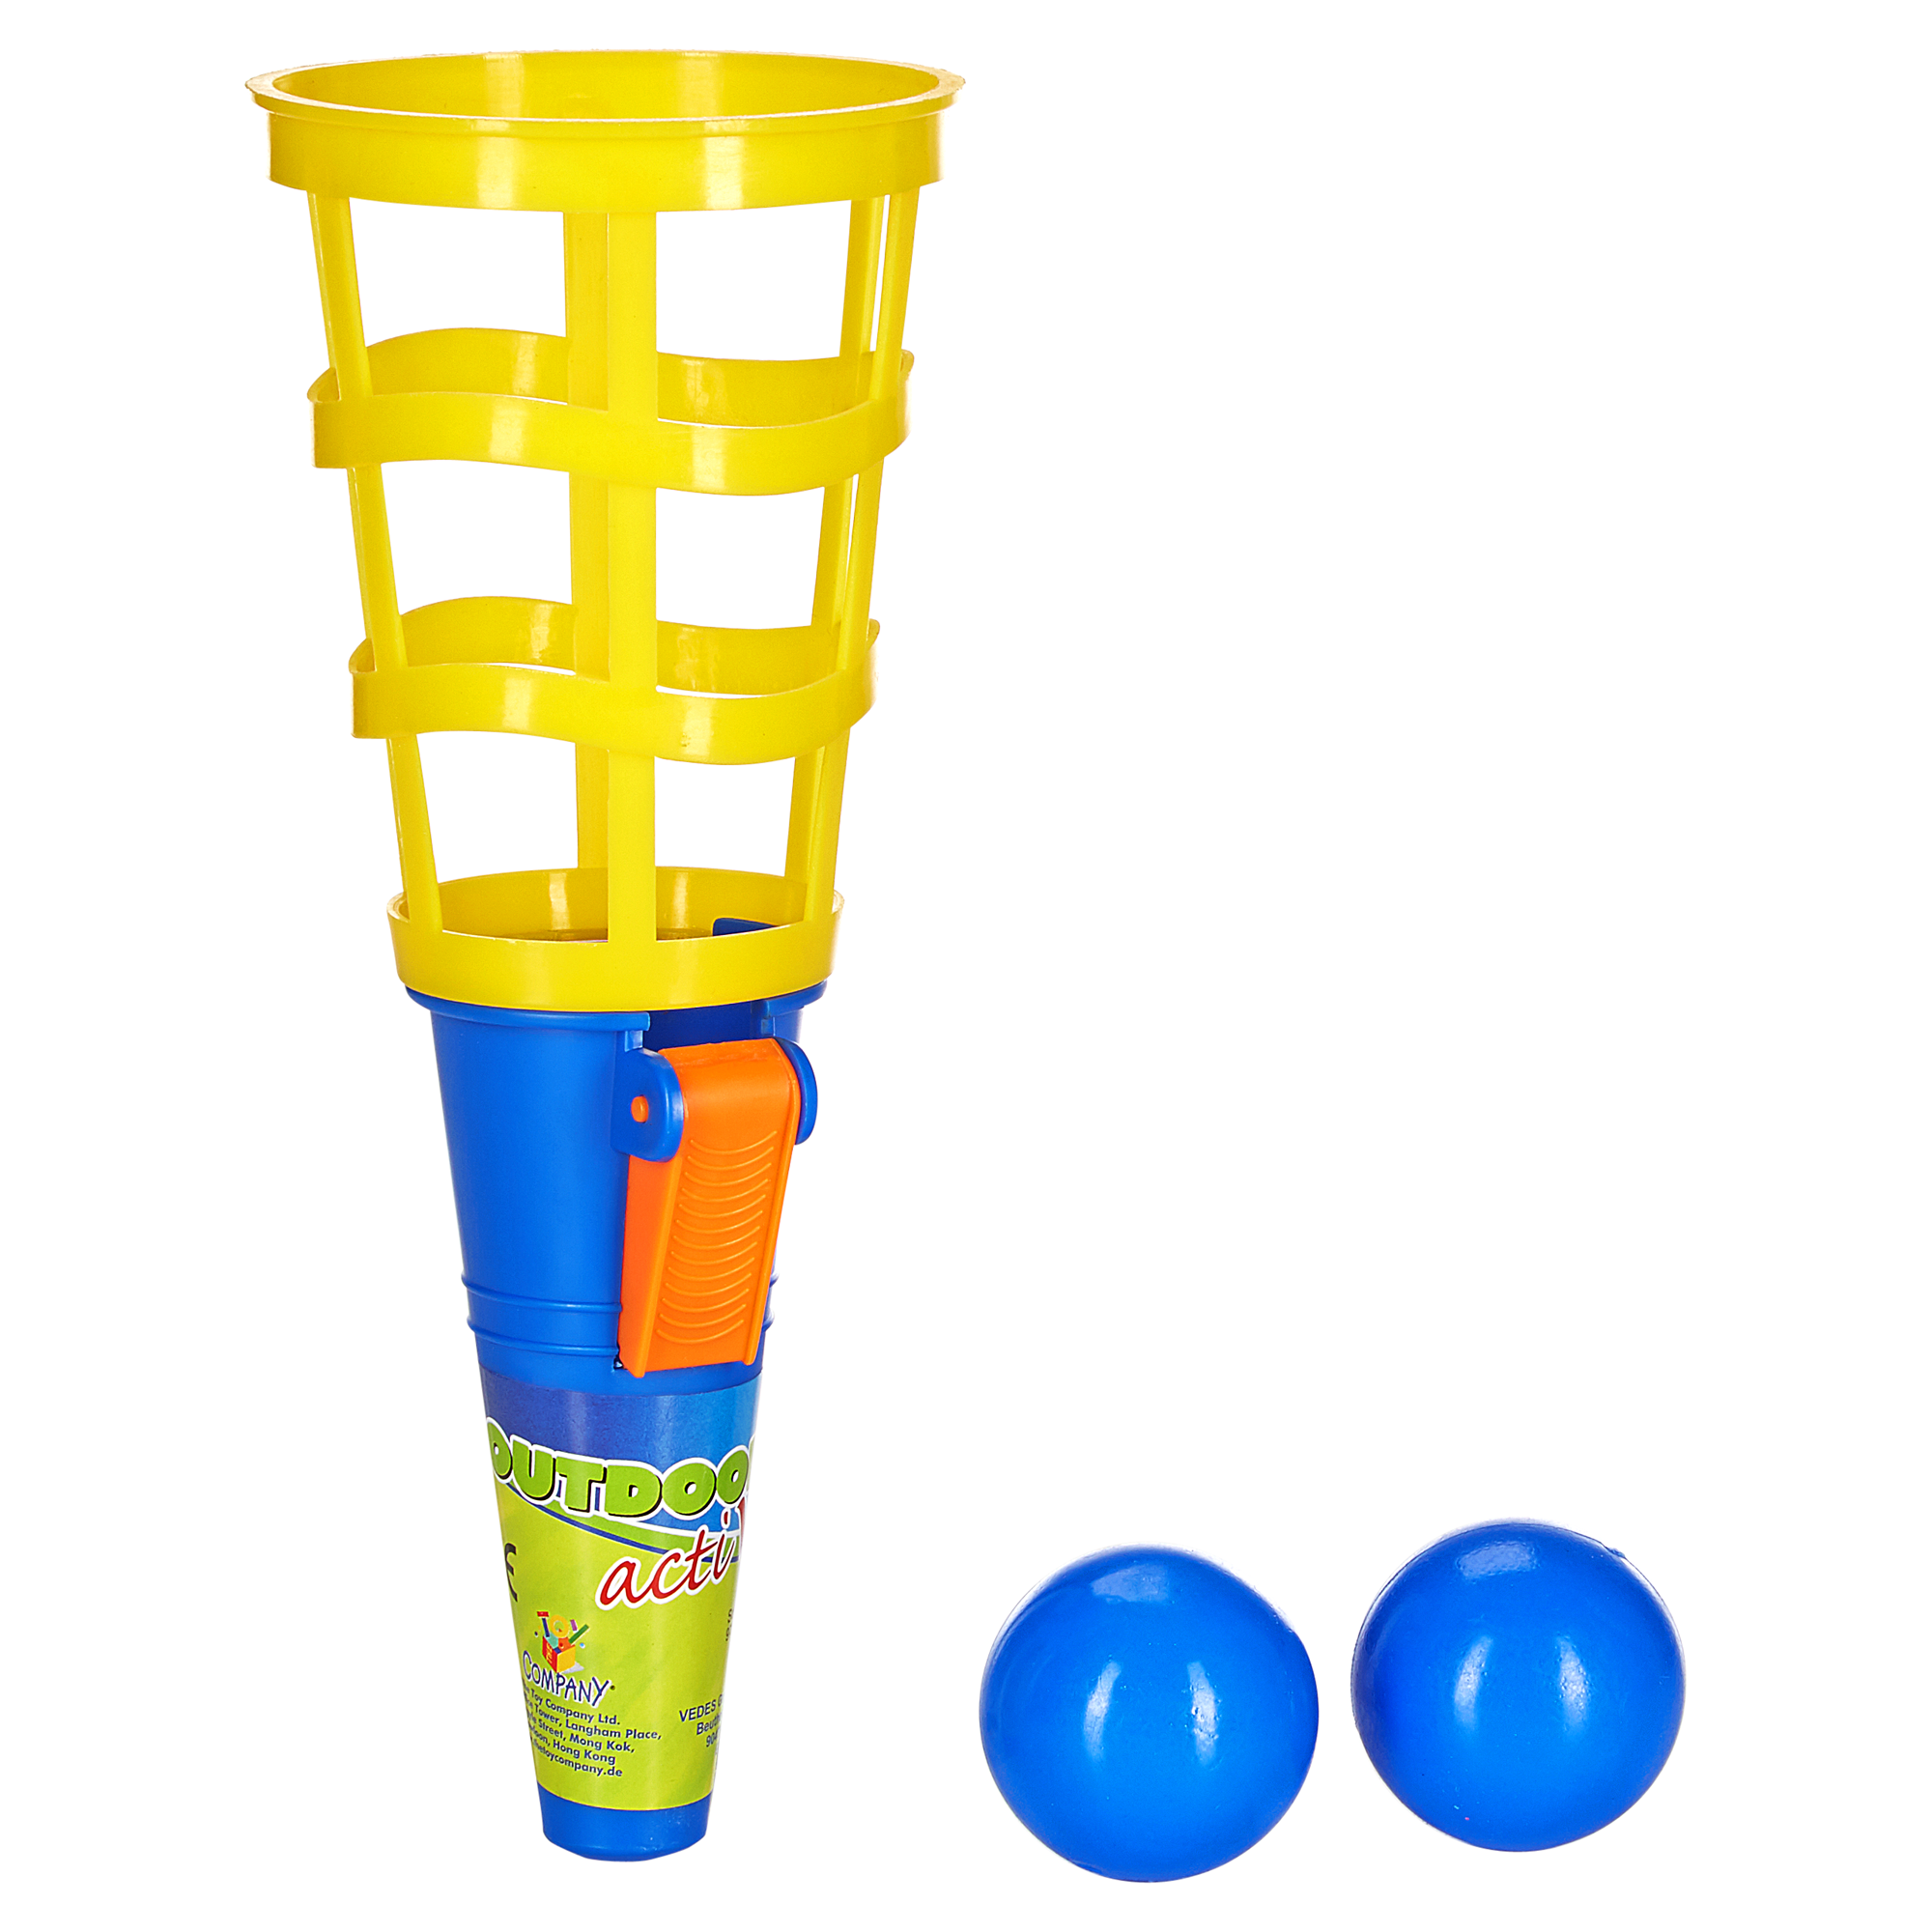 Fangbecher mit 2 Bällen blau/gelb + product picture